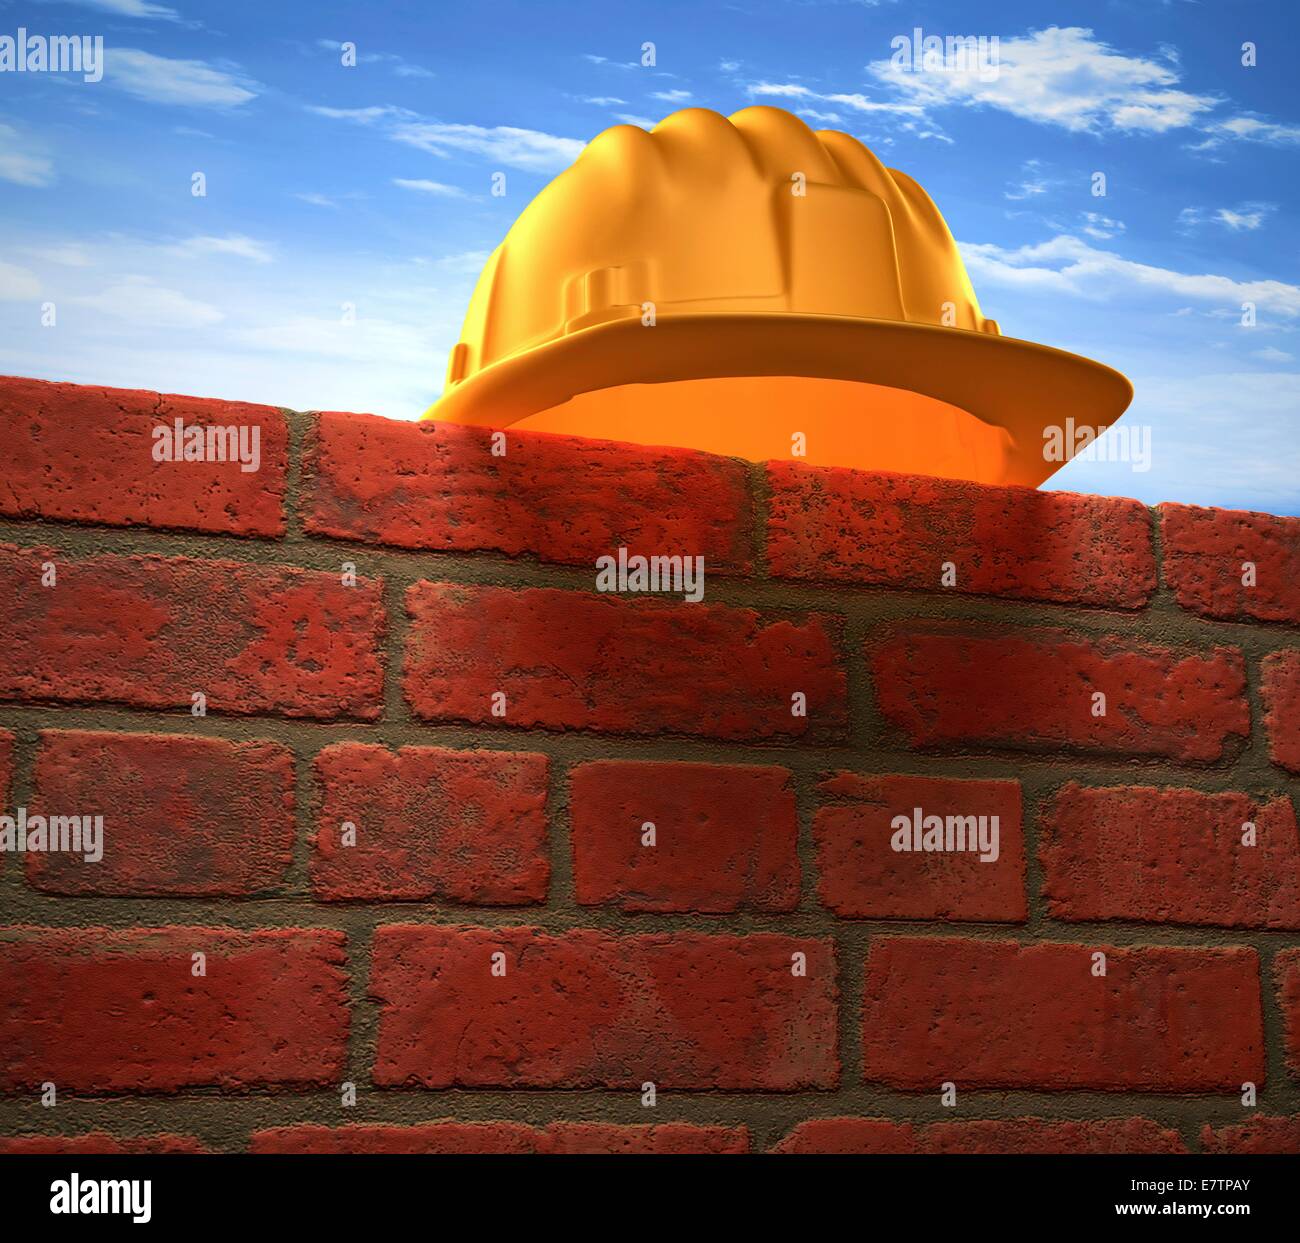 Hard hat on a brick wall, conceptual artwork. Stock Photo